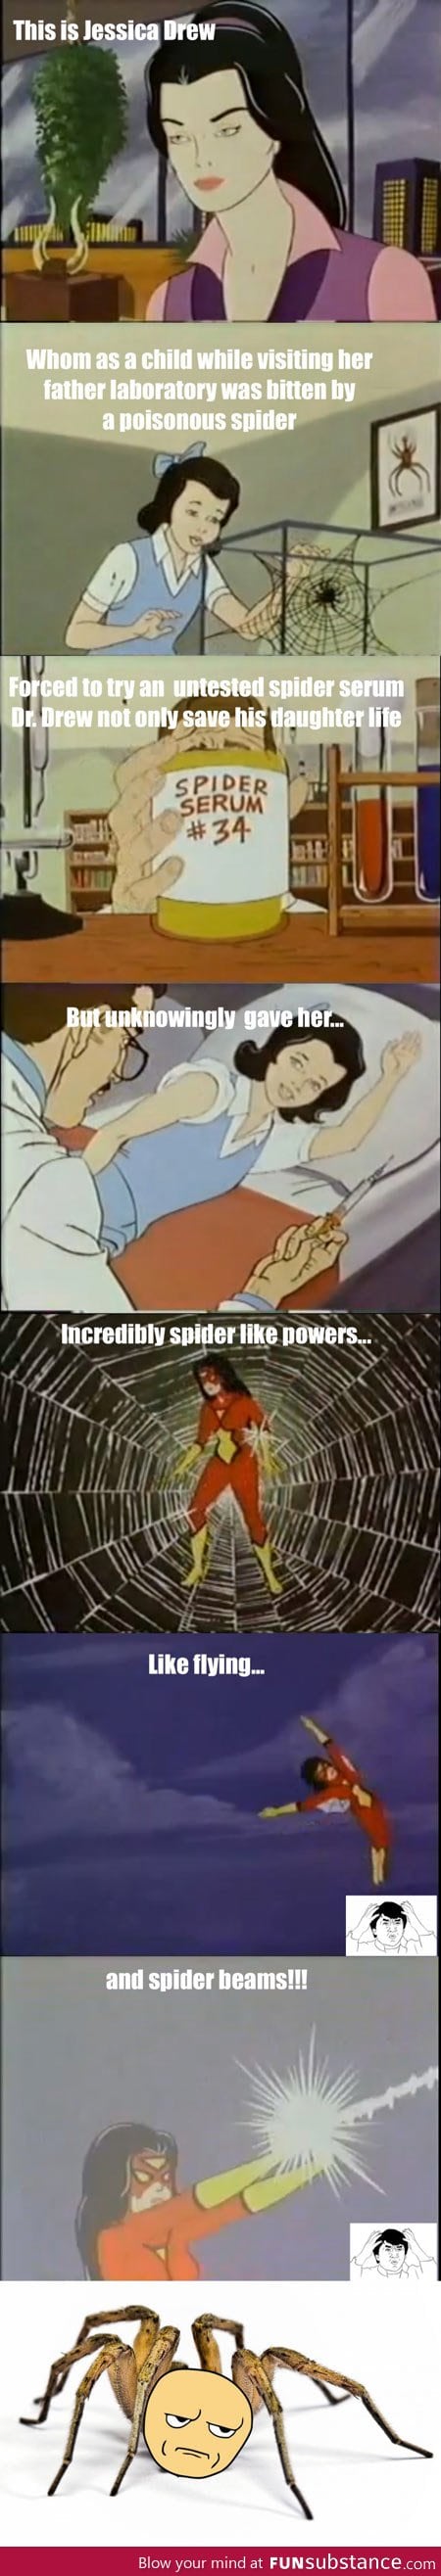 Spider woman logic